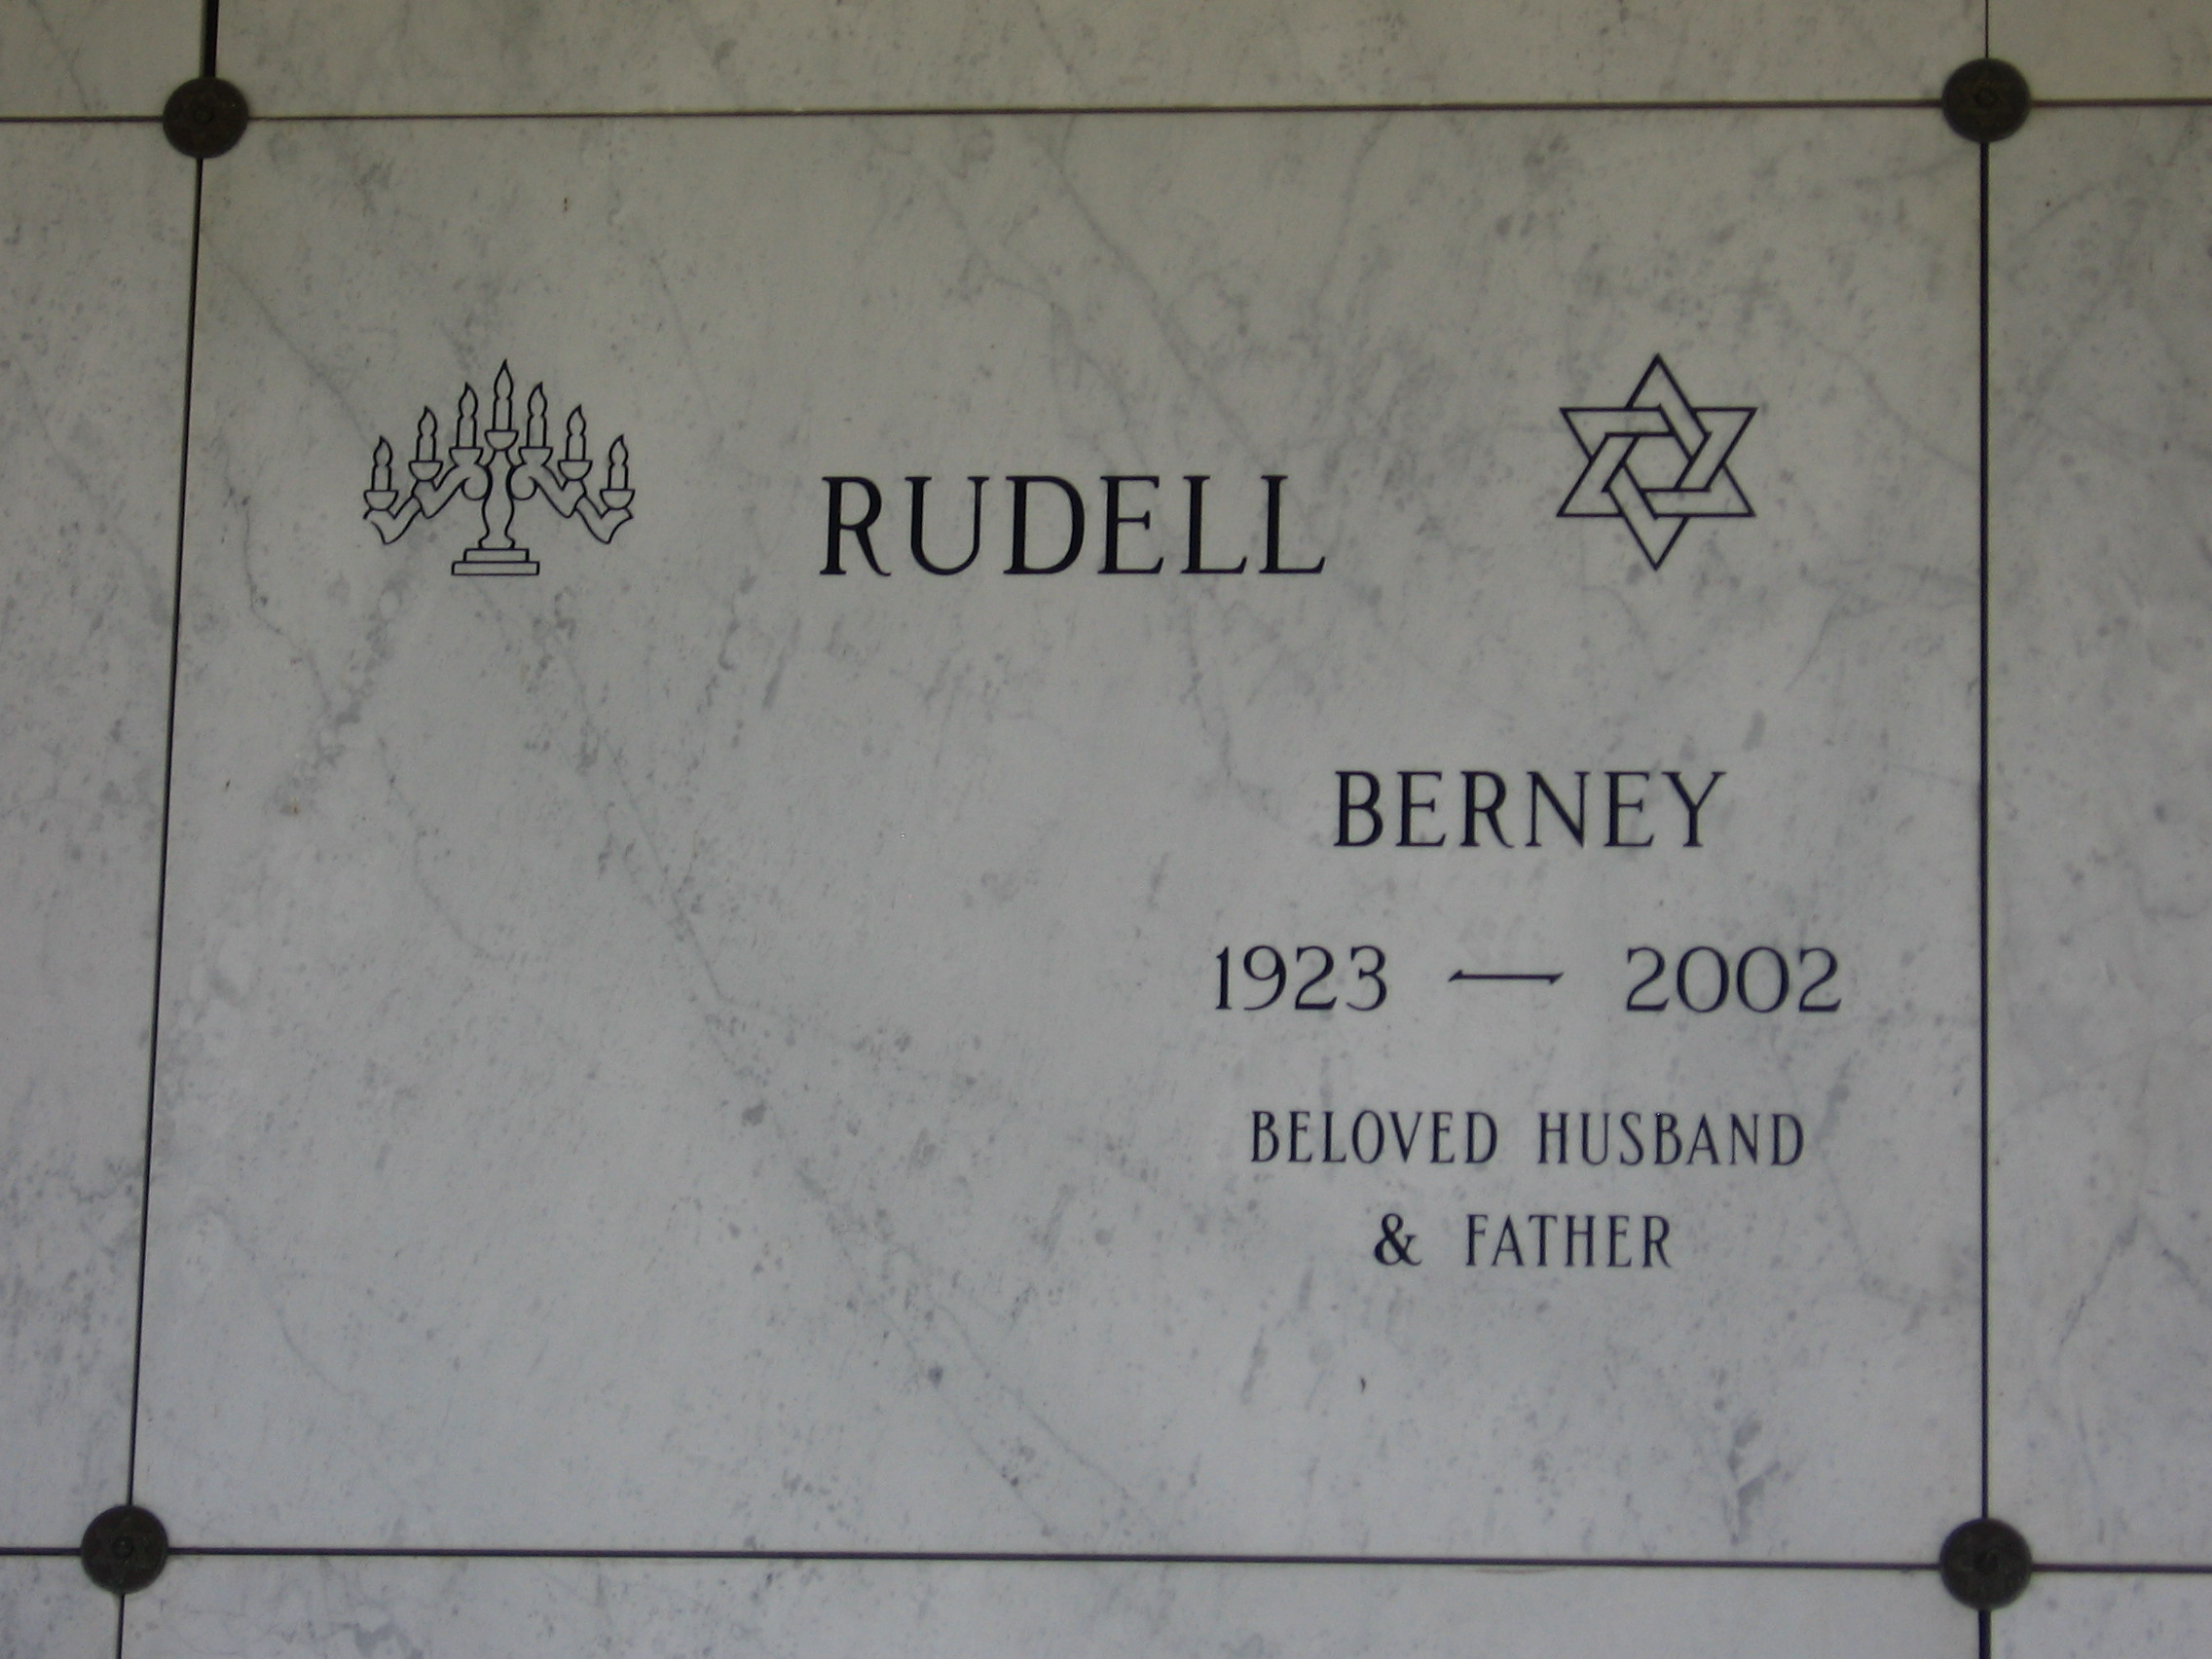 Berney Rudell